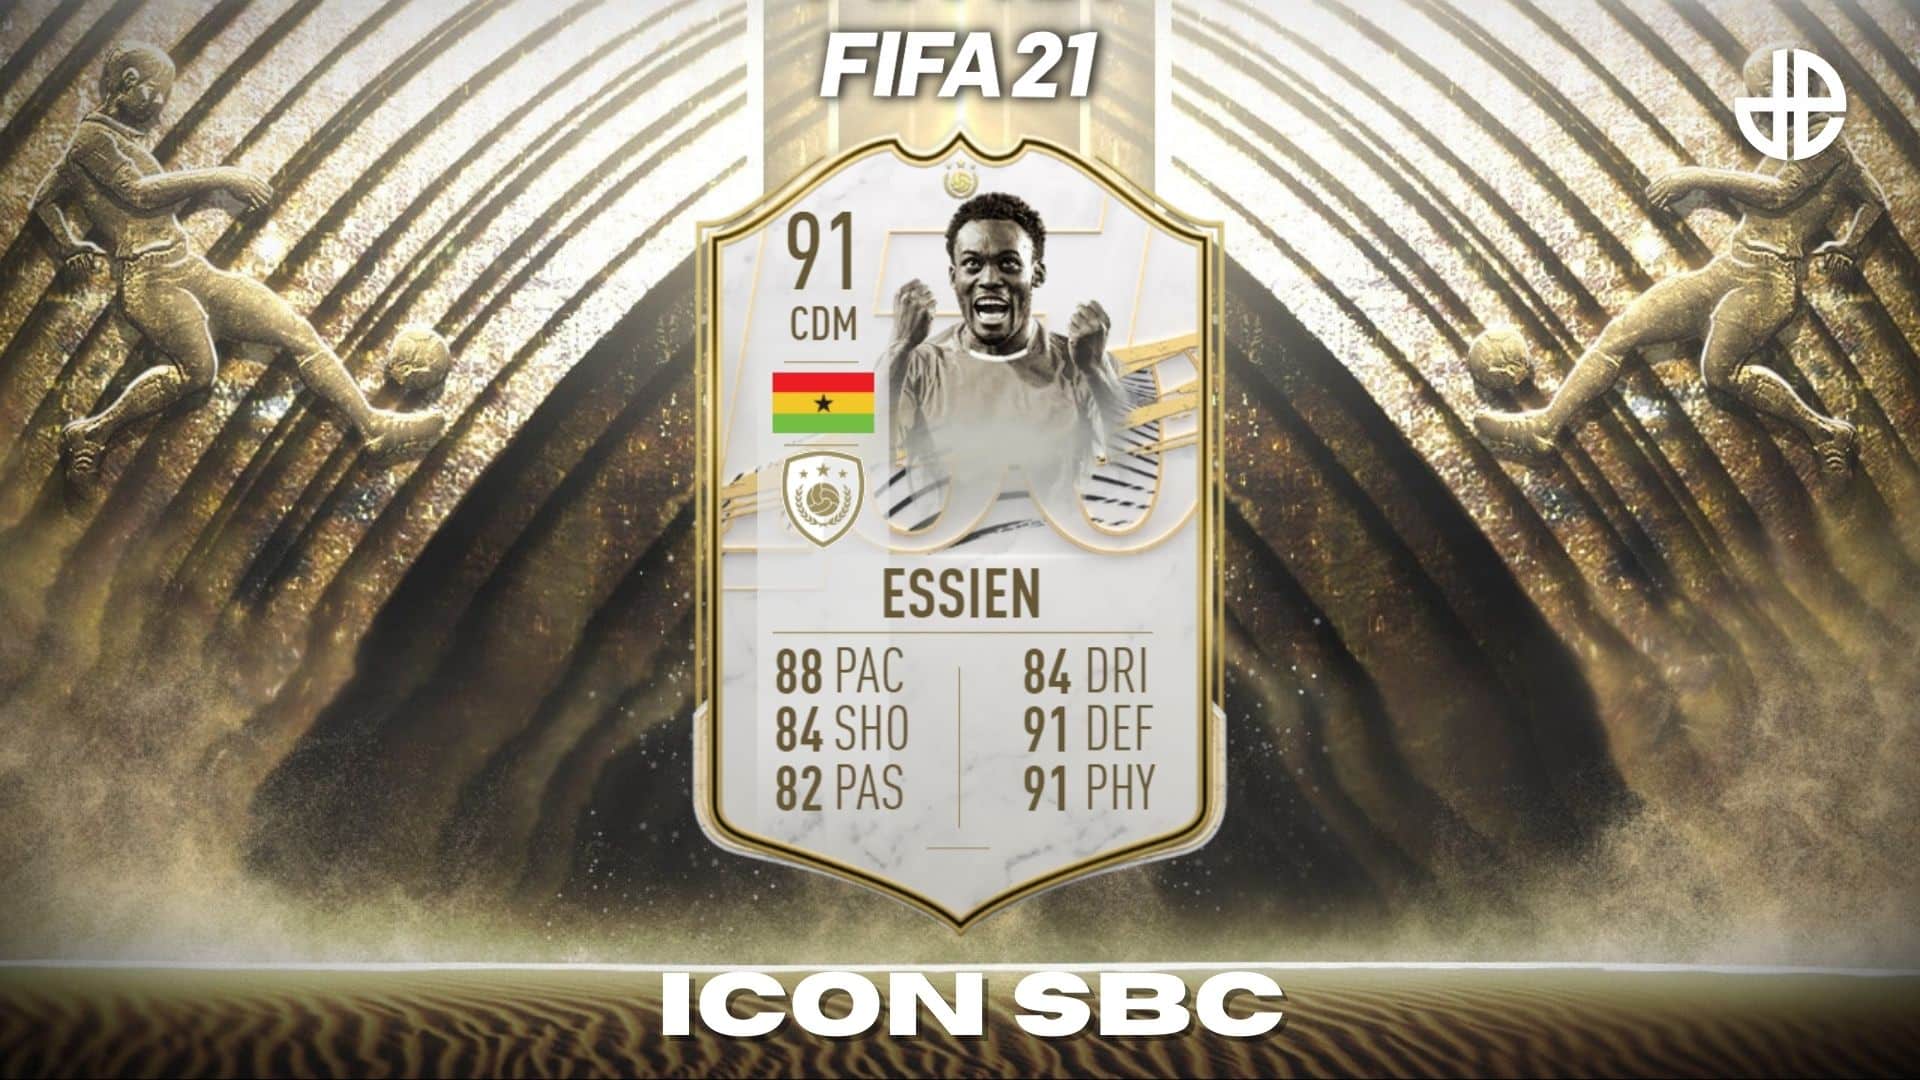 FIFA 21 Michael Essien ICON SBC